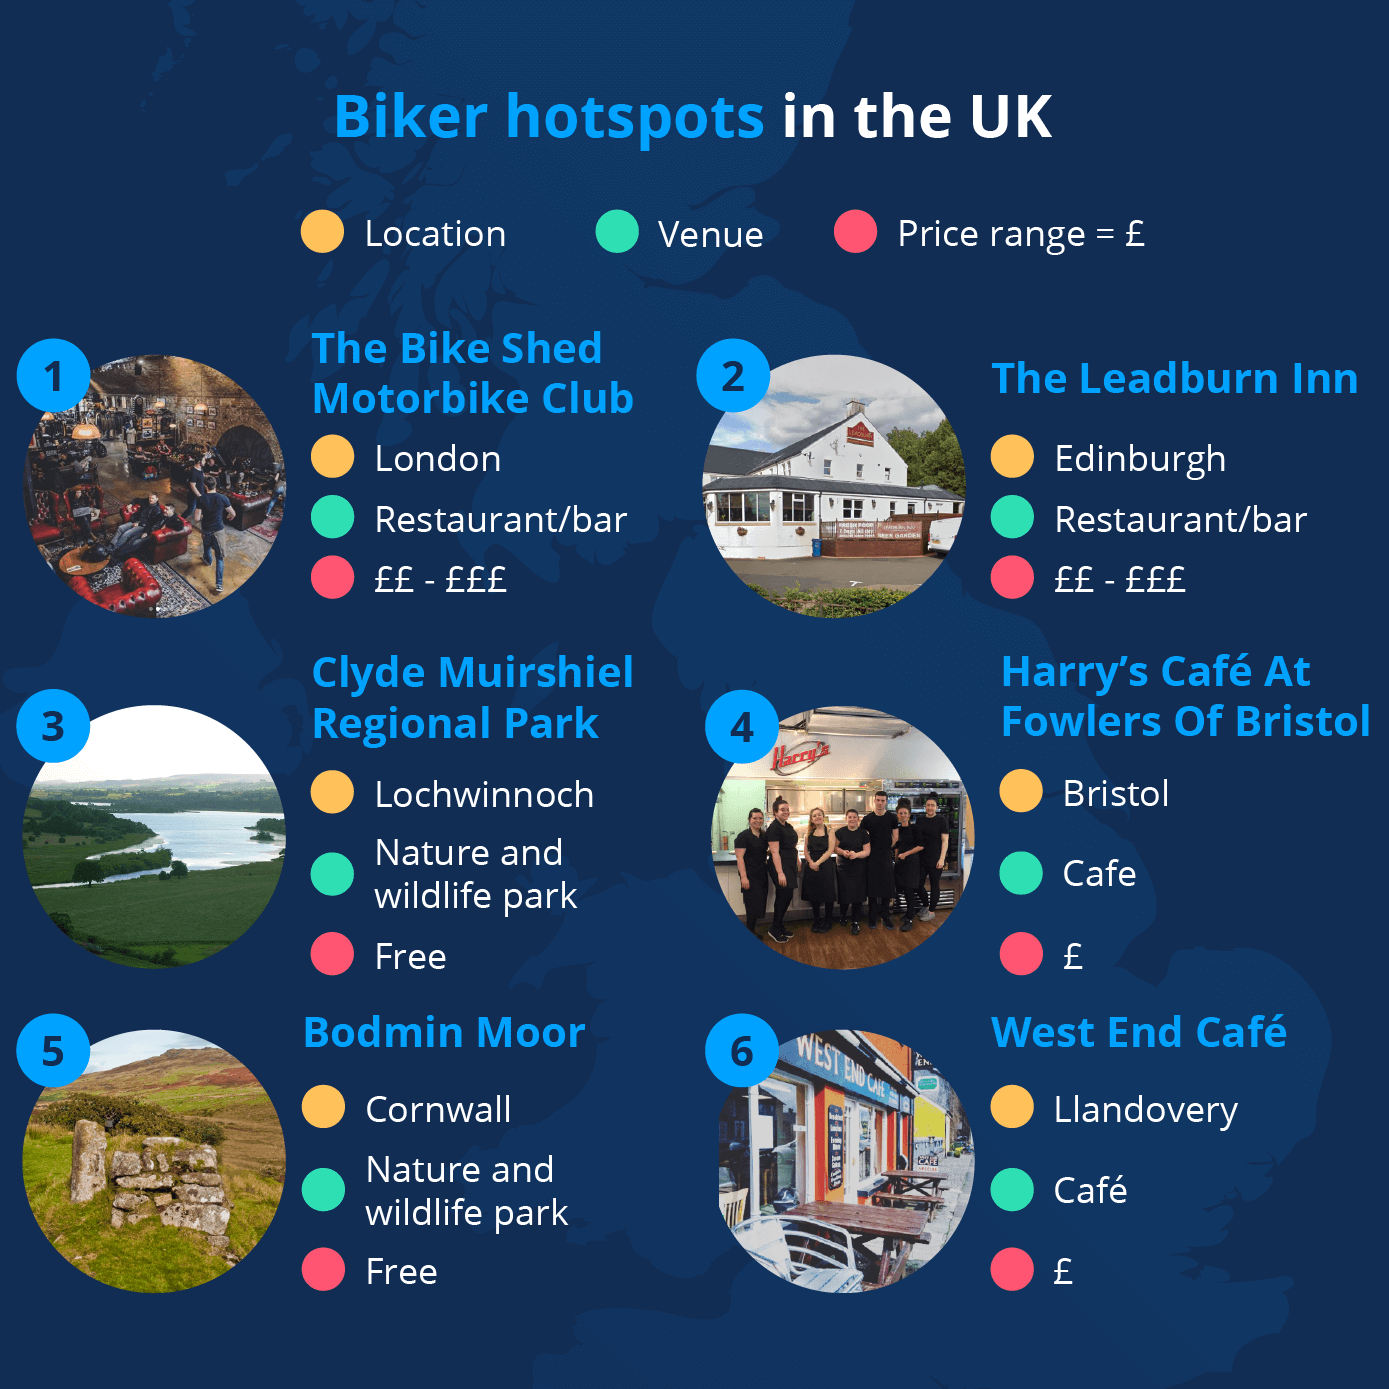 motorbiking hotspots in the UK